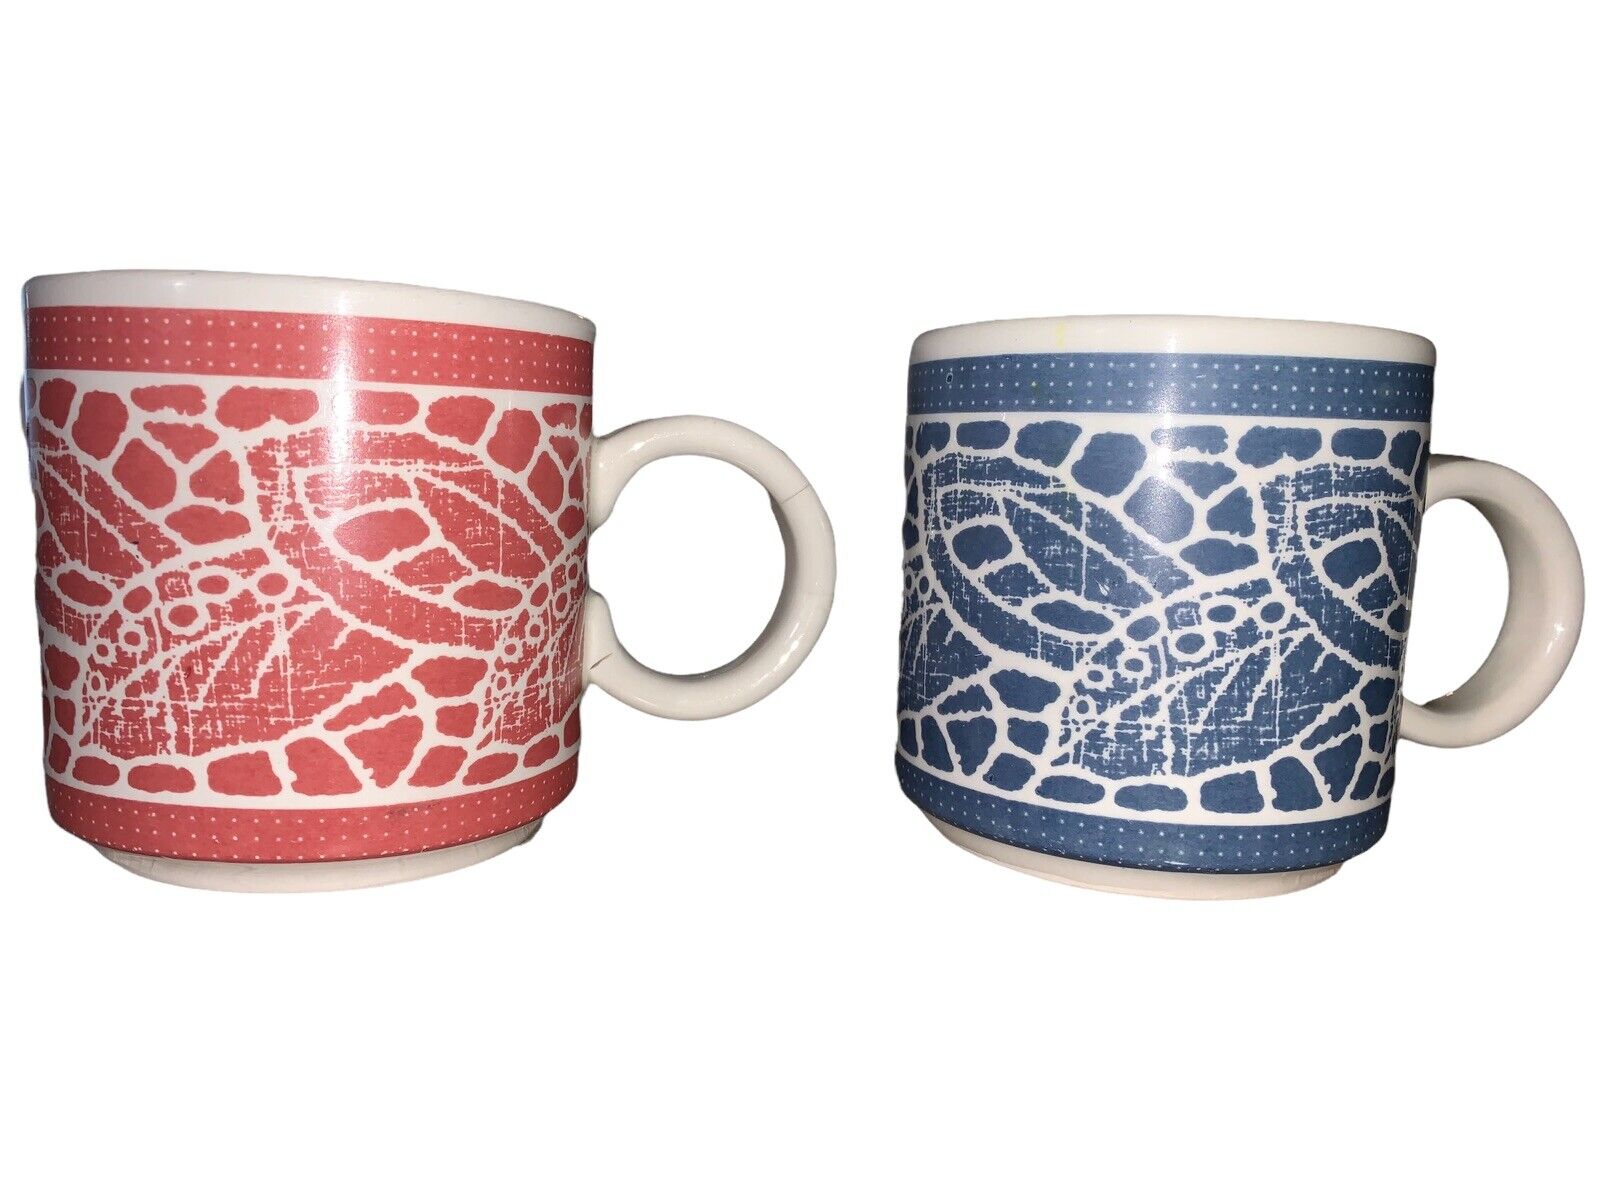 Arthur Wood Made in England 9 oz Coffee Tea Cups Mugs EUC Botanical Red Blue